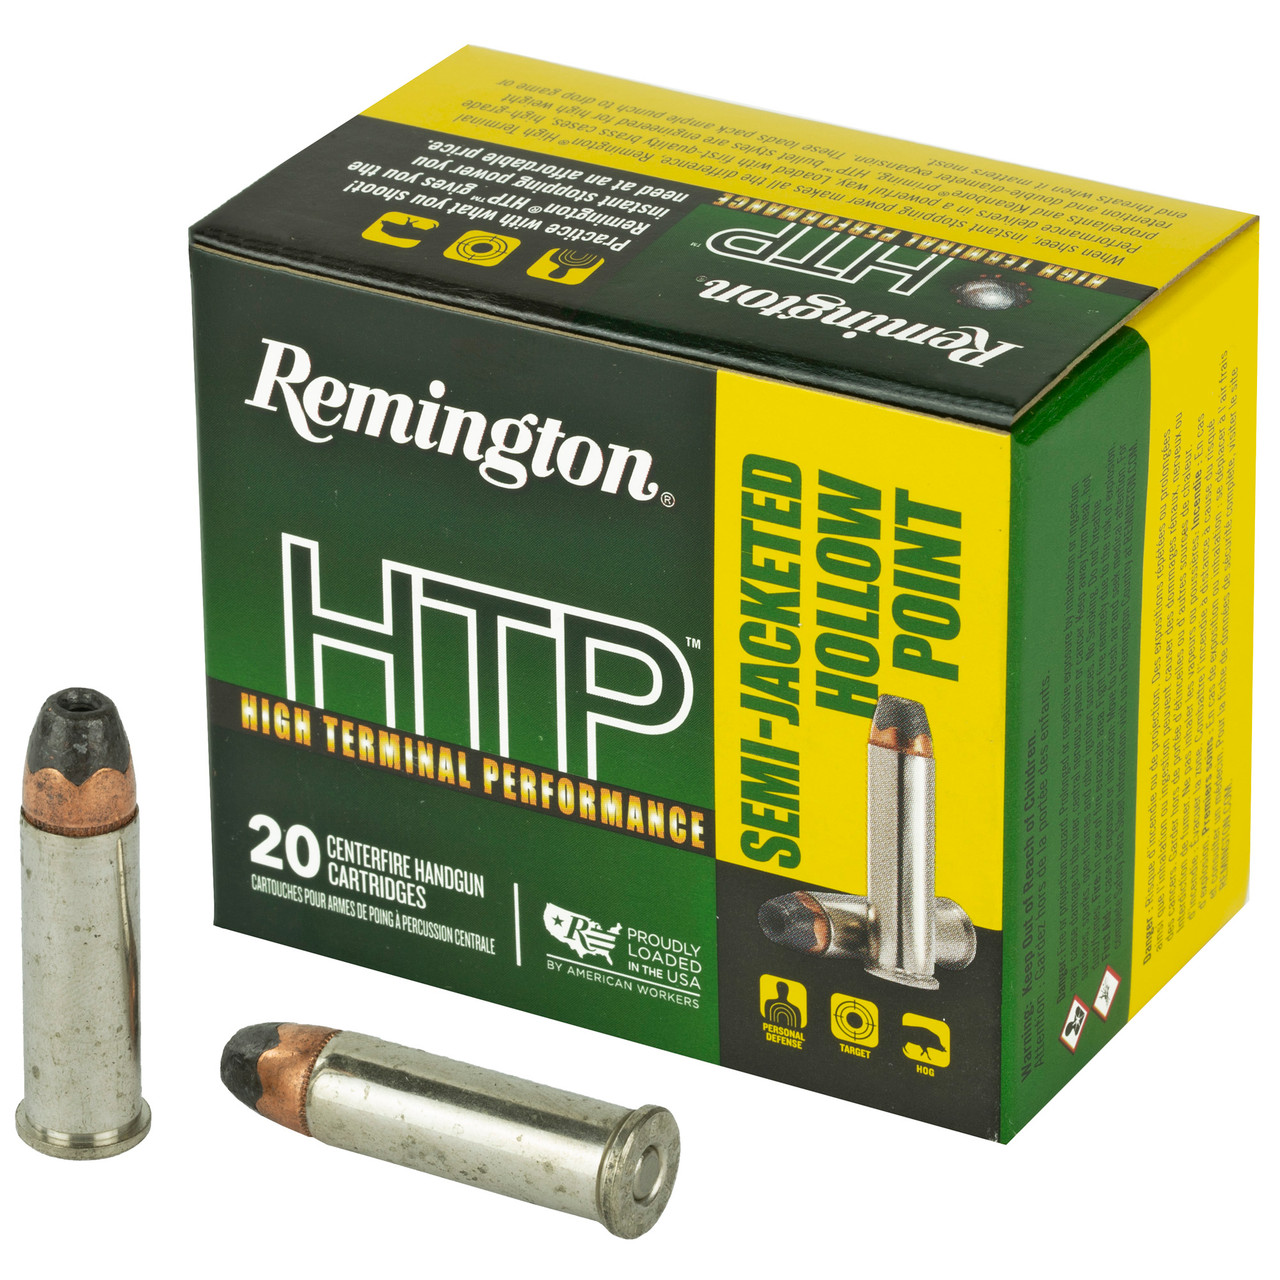 Remington 22303 Htp 38spl +p 125gr Sjhp 20/500